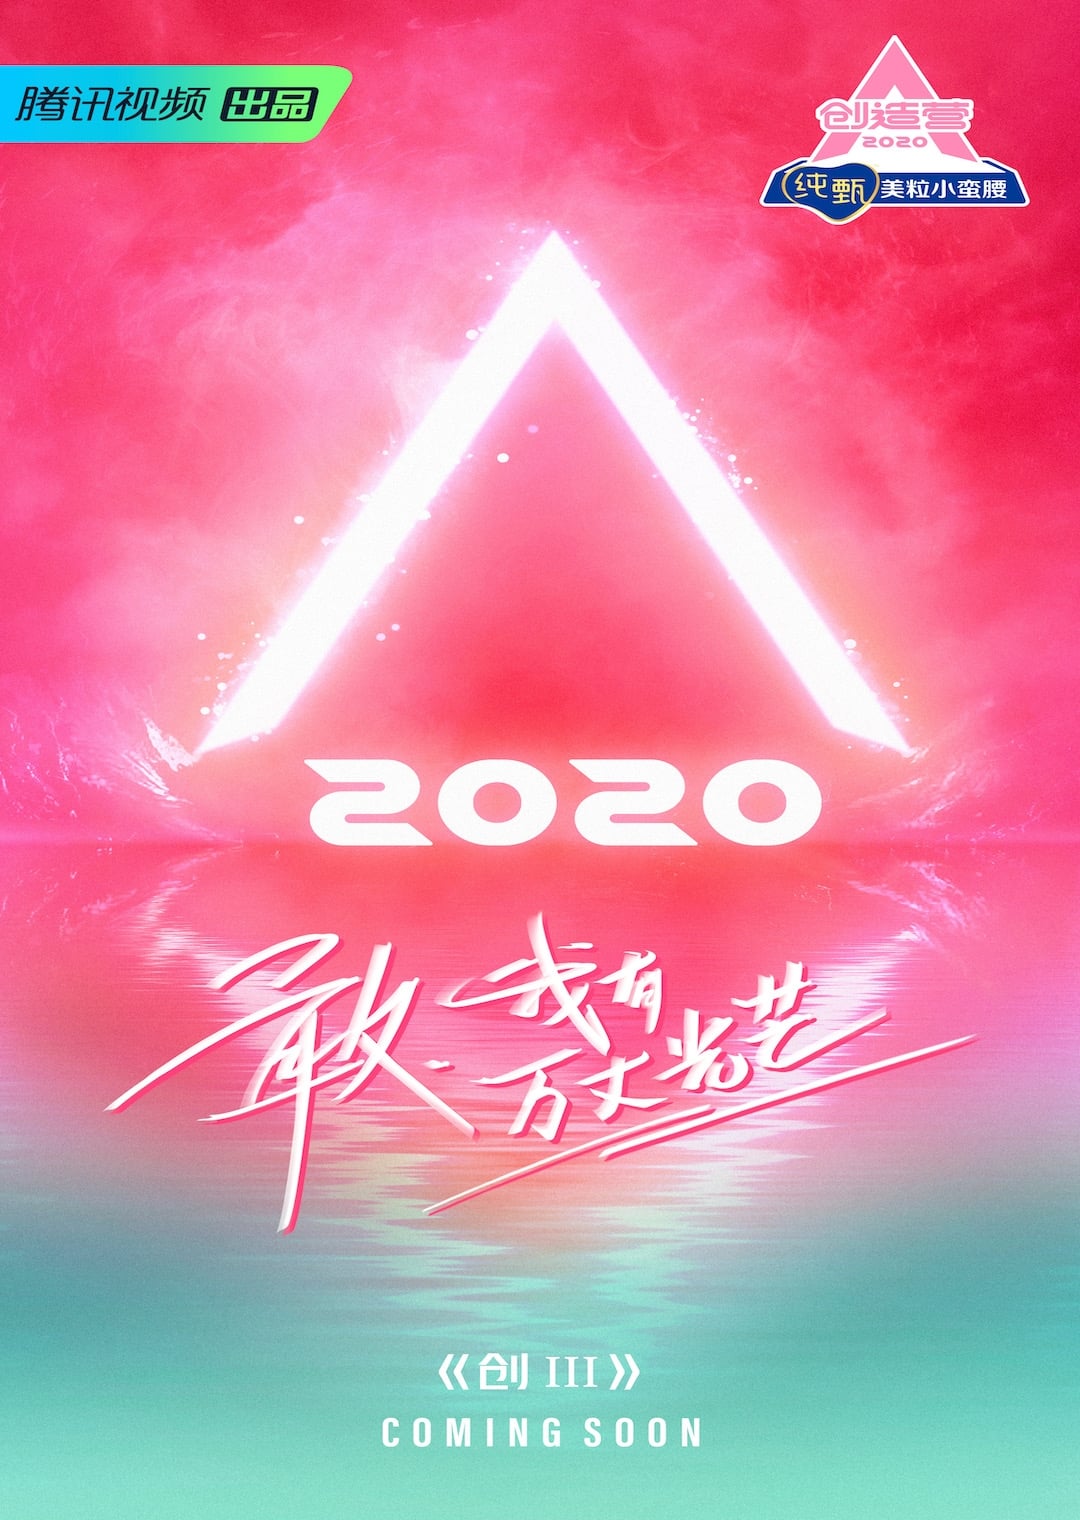 TV ratings for Chuang 2020 (创造营2020) in Japan. Tencent Video TV series